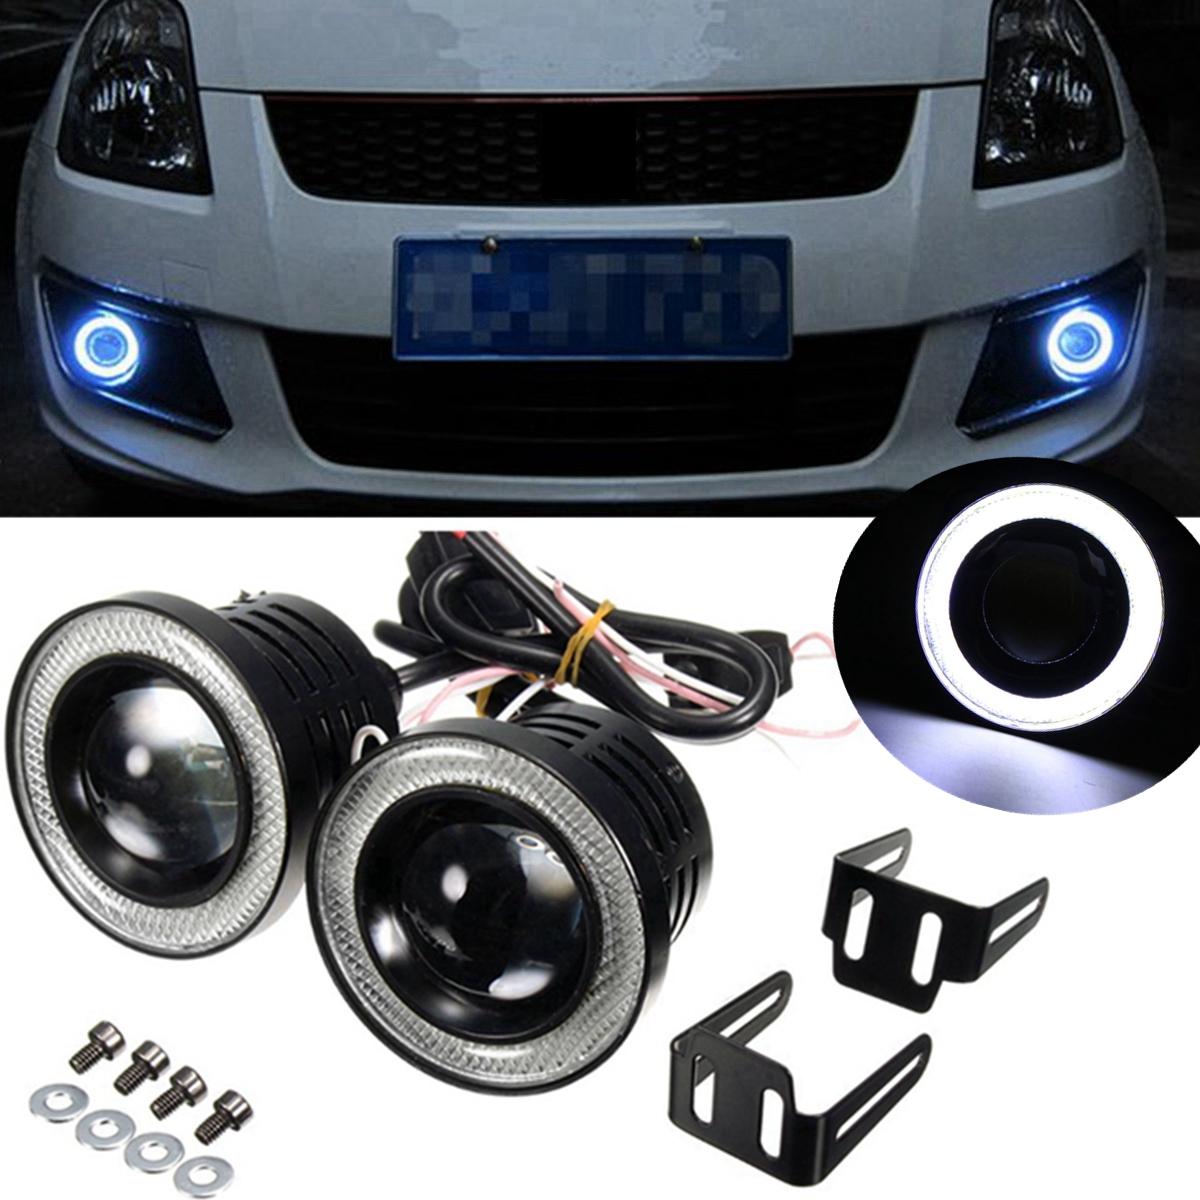 2x 3"inch Projector LED Fog Light w/ White Angel Eyes Halo Ring DRL Car Auto 12V